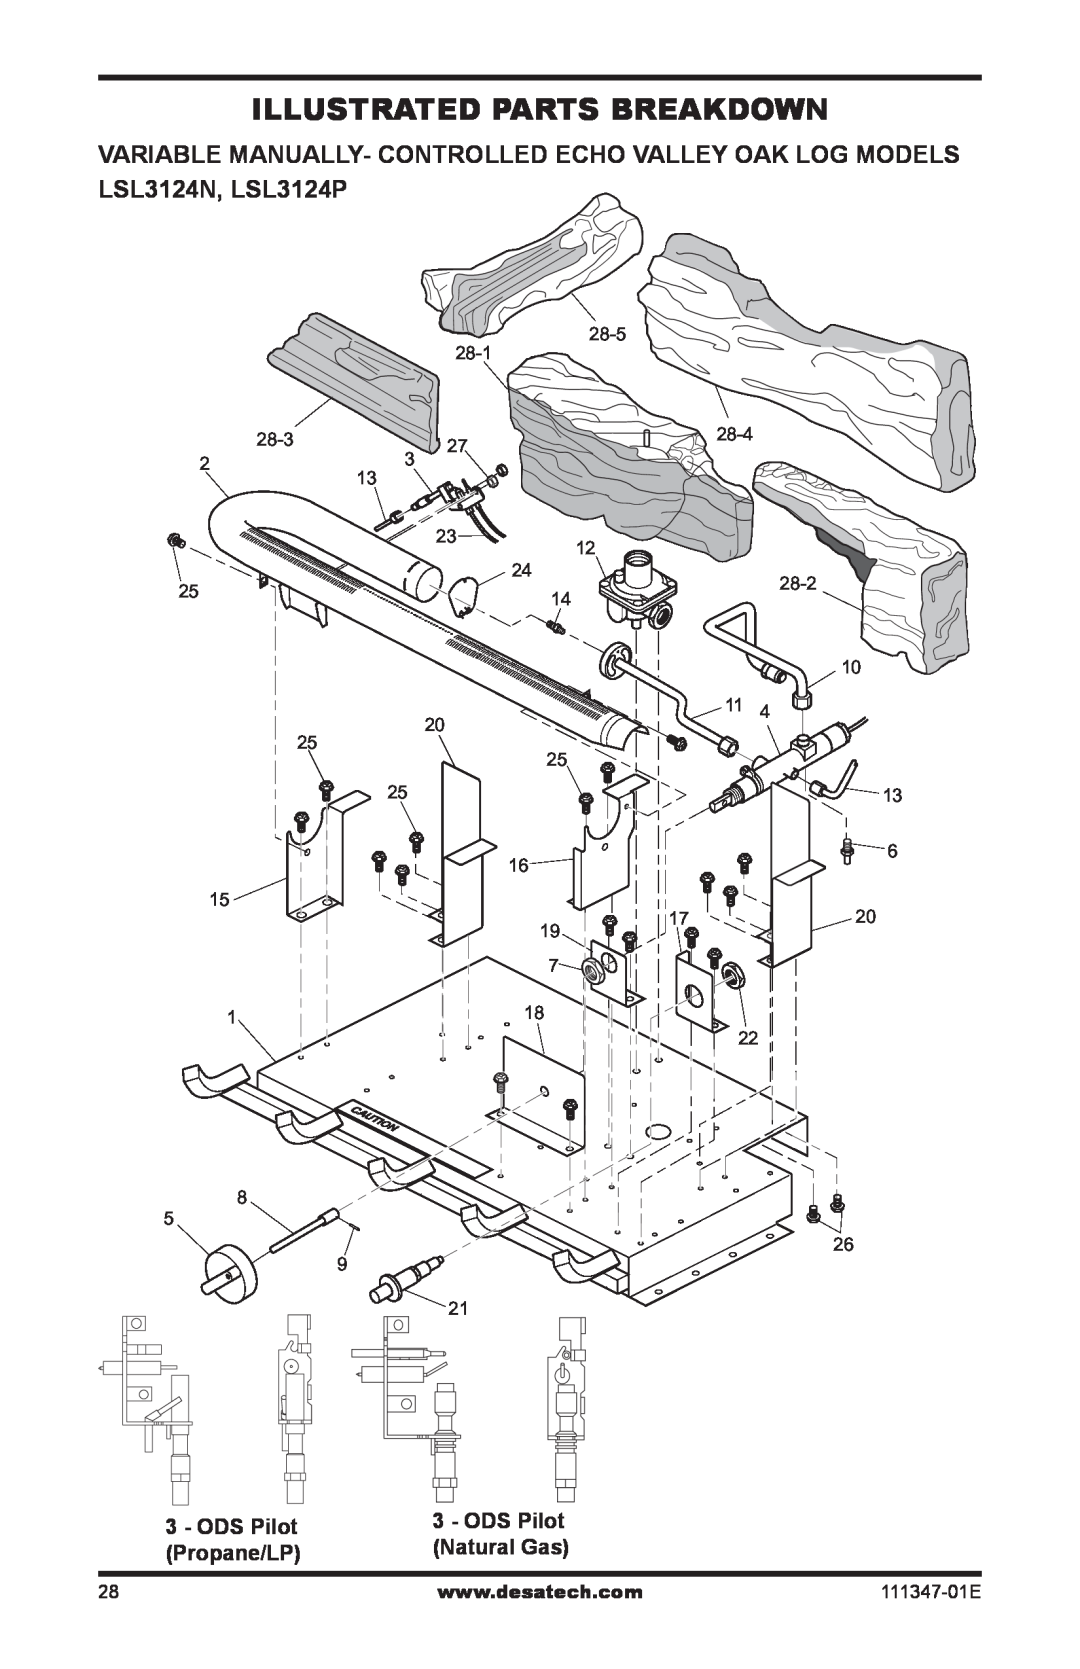 Desa CDL3924PT, CDL3924NT, LSL3124P installation manual Illustrated Parts Breakdown, ODS Pilot, Propane/LP 